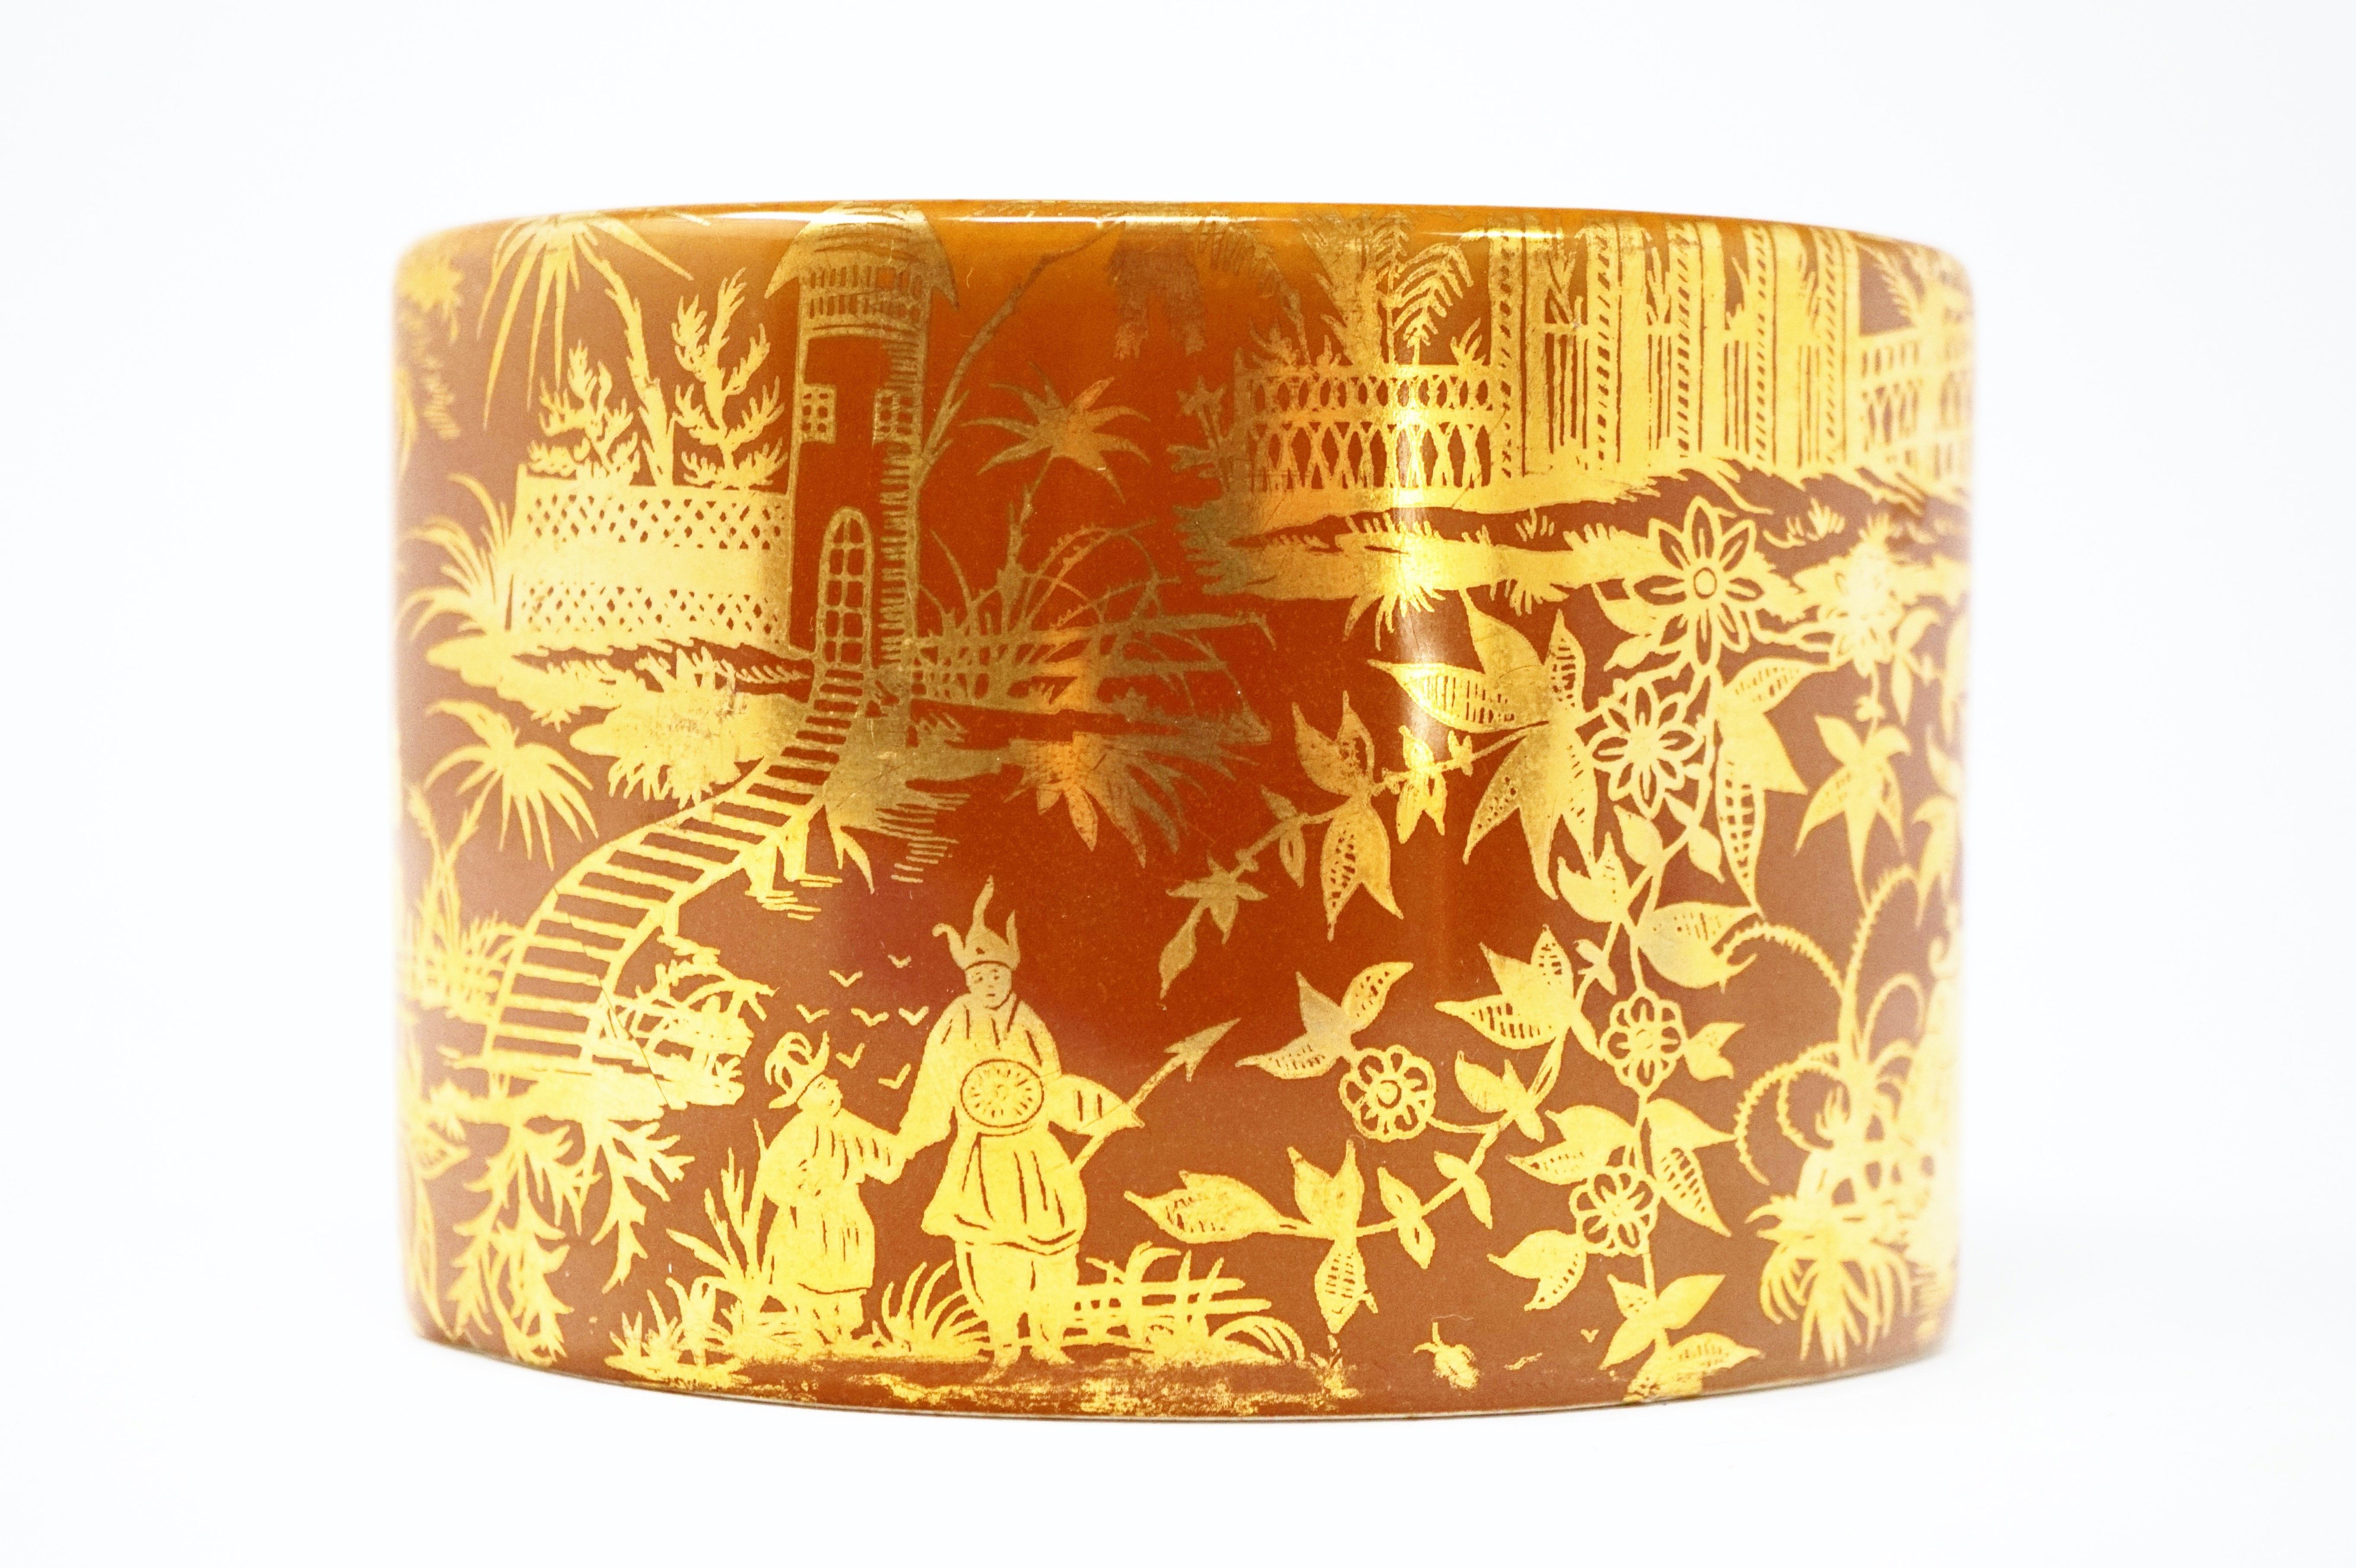 - Rare oriental / chinoiserie 'Piccolo Coromandel' design
- Rust brown glazed ceramic vase with gold leaf design
- Measures: 3